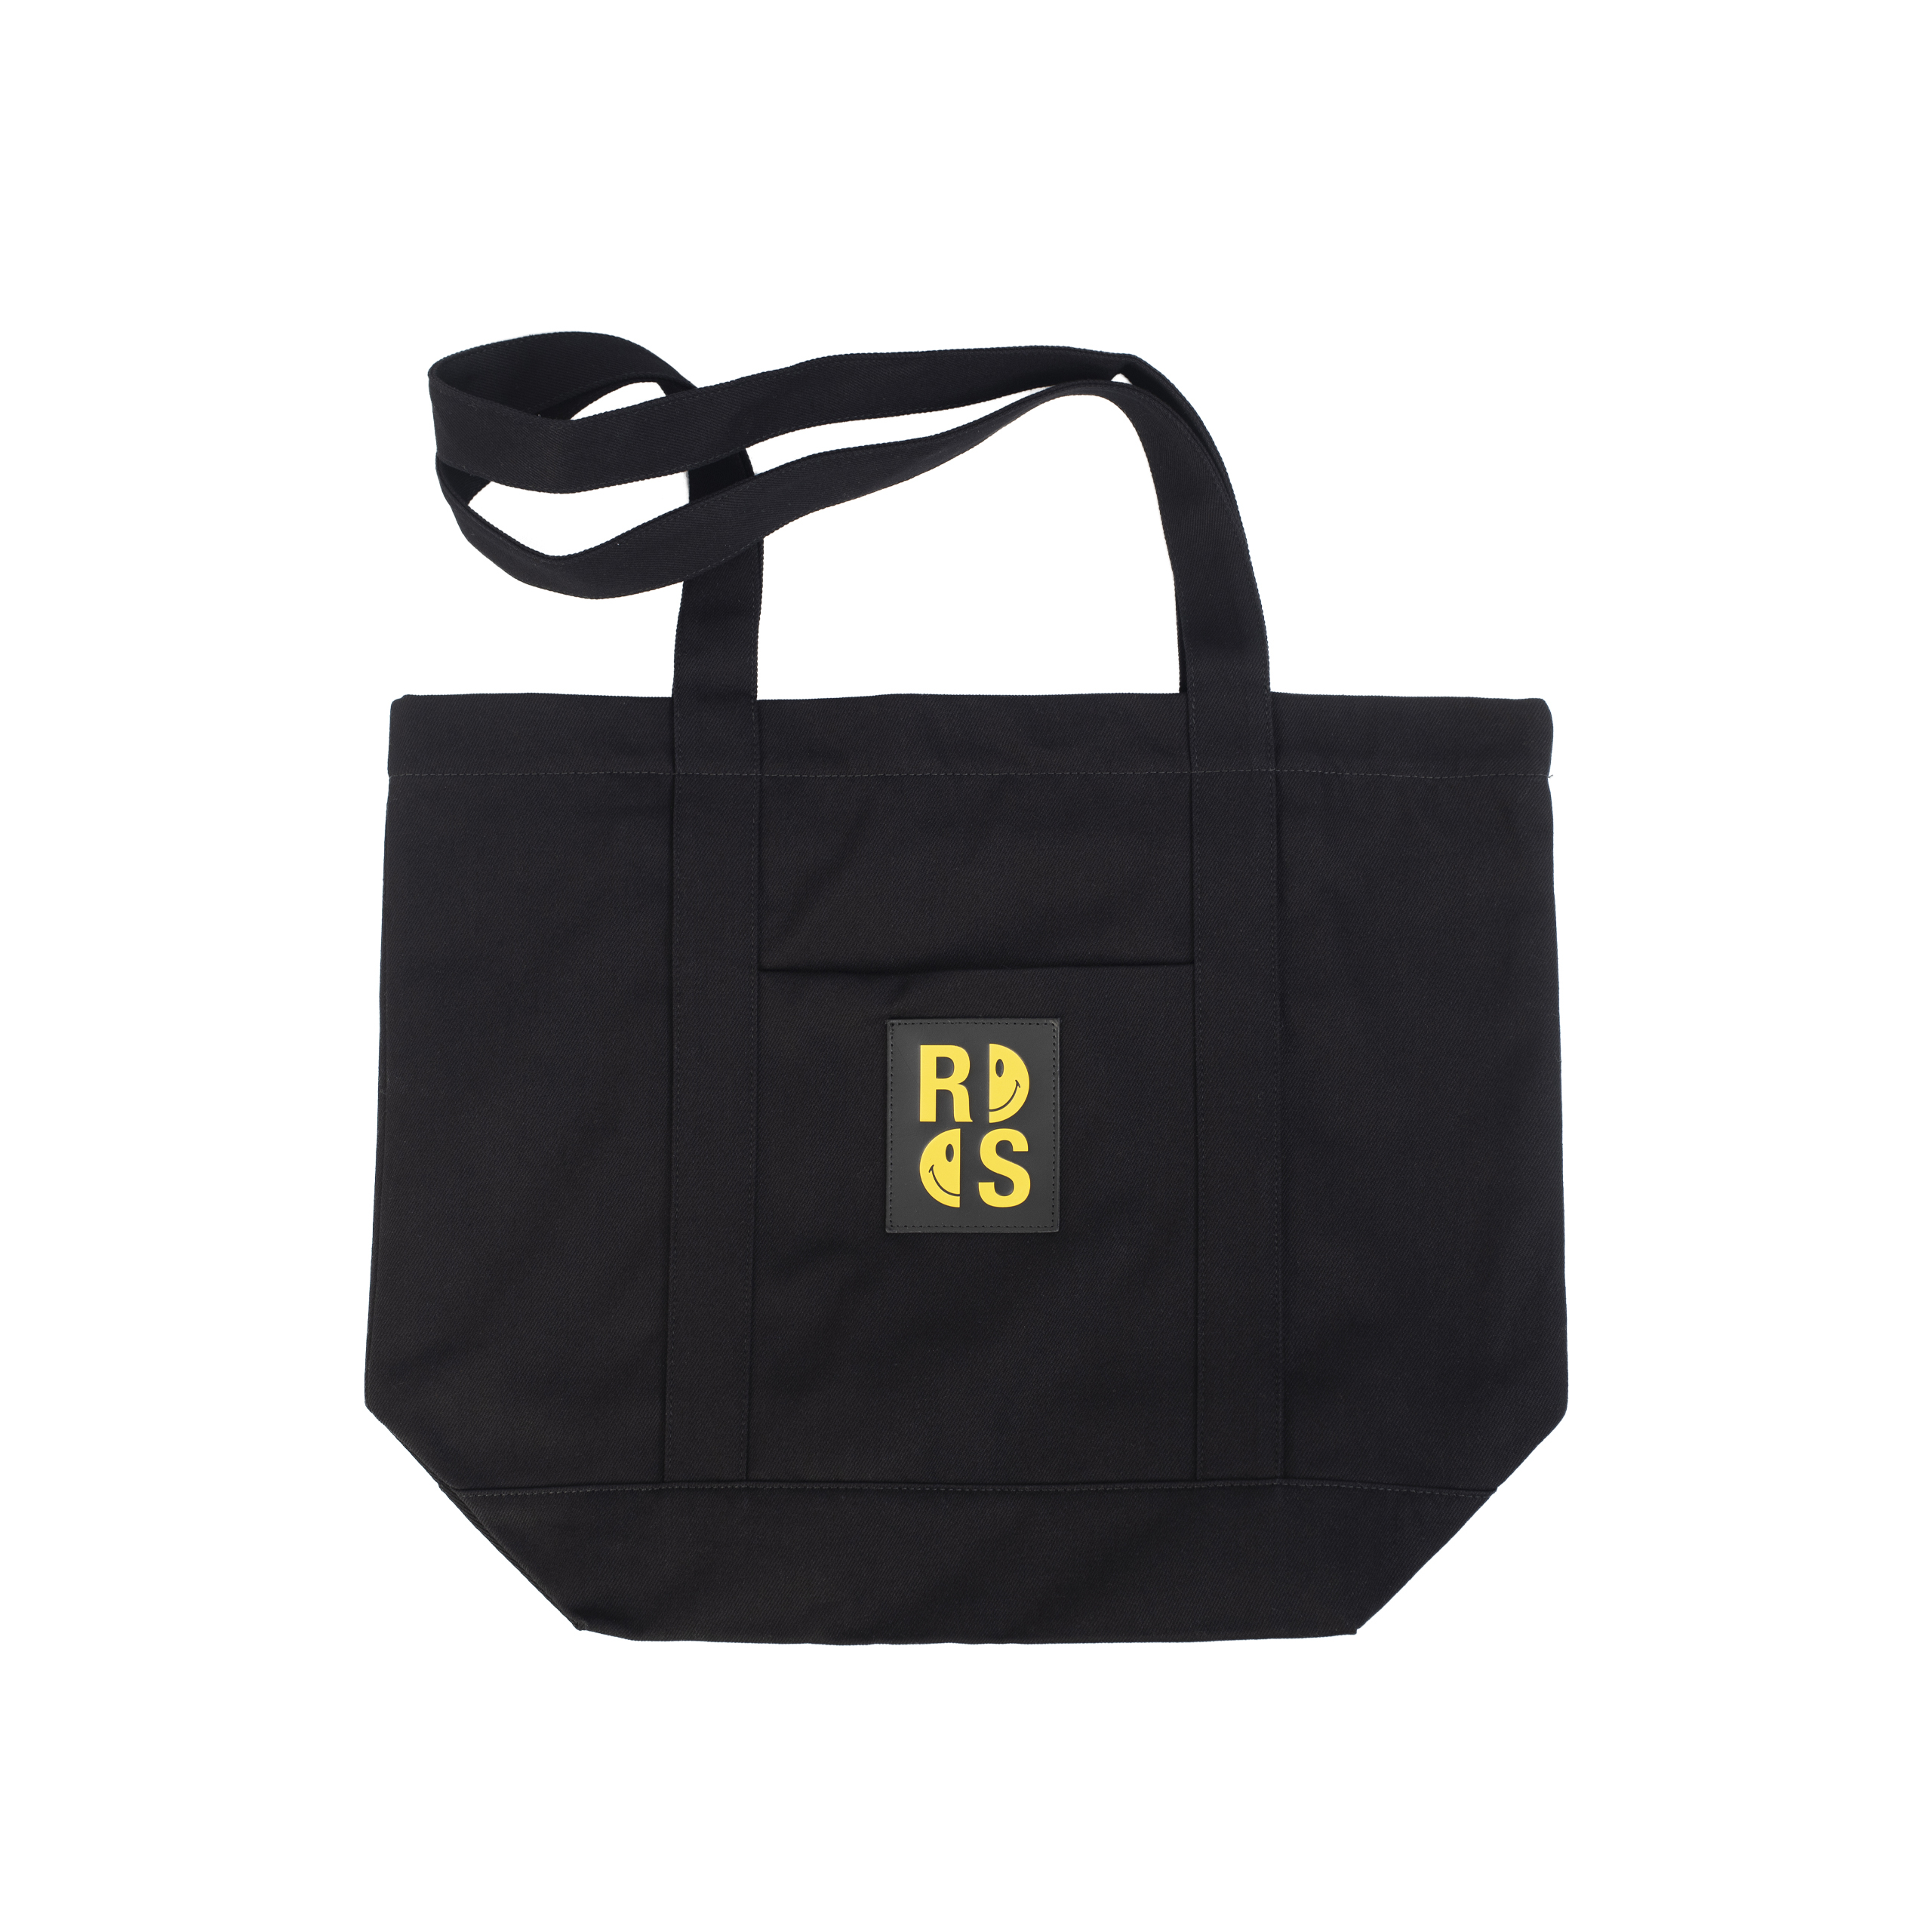 Джинсовая сумка-шоппер Raf Simons x Smiley с патчем Raf Simons 224-935-11000-0099, размер One Size - фото 4